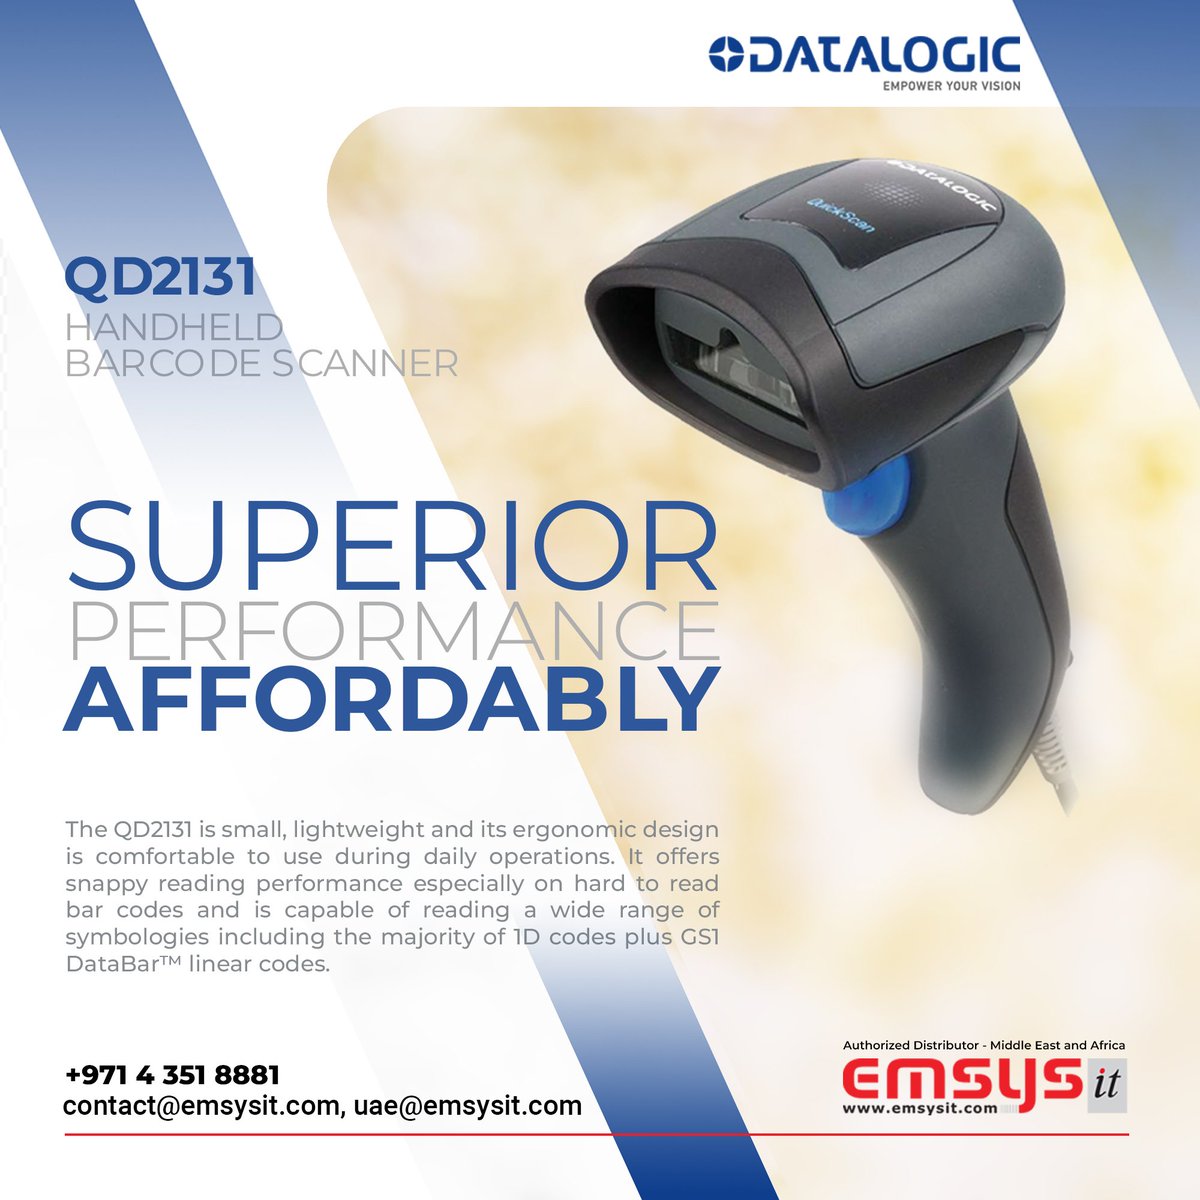 DATALOGIC Handheld Barcode Scanner
QD2131
#emsys #emsysit #emsysgt #datalogic #handheld #scanners #barcodescanner #dubai #uae